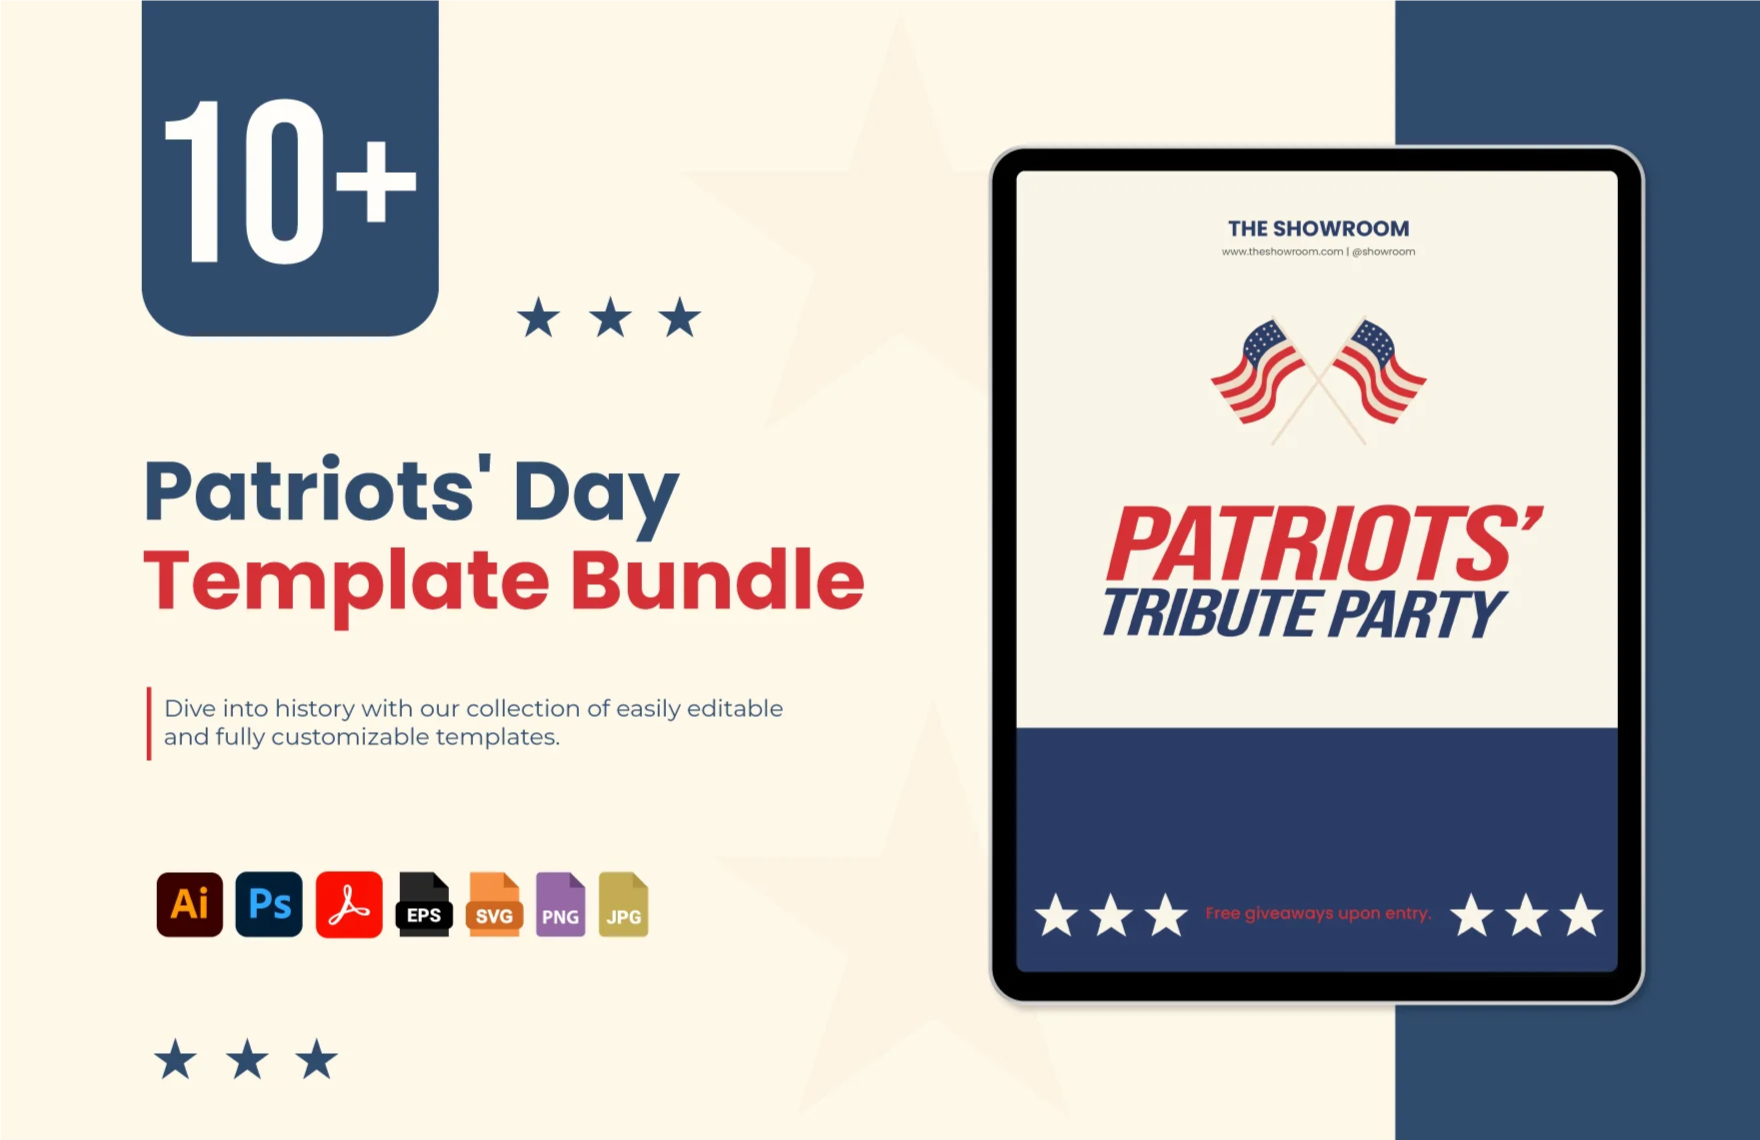 10+ Patriots' Day Template Bundle